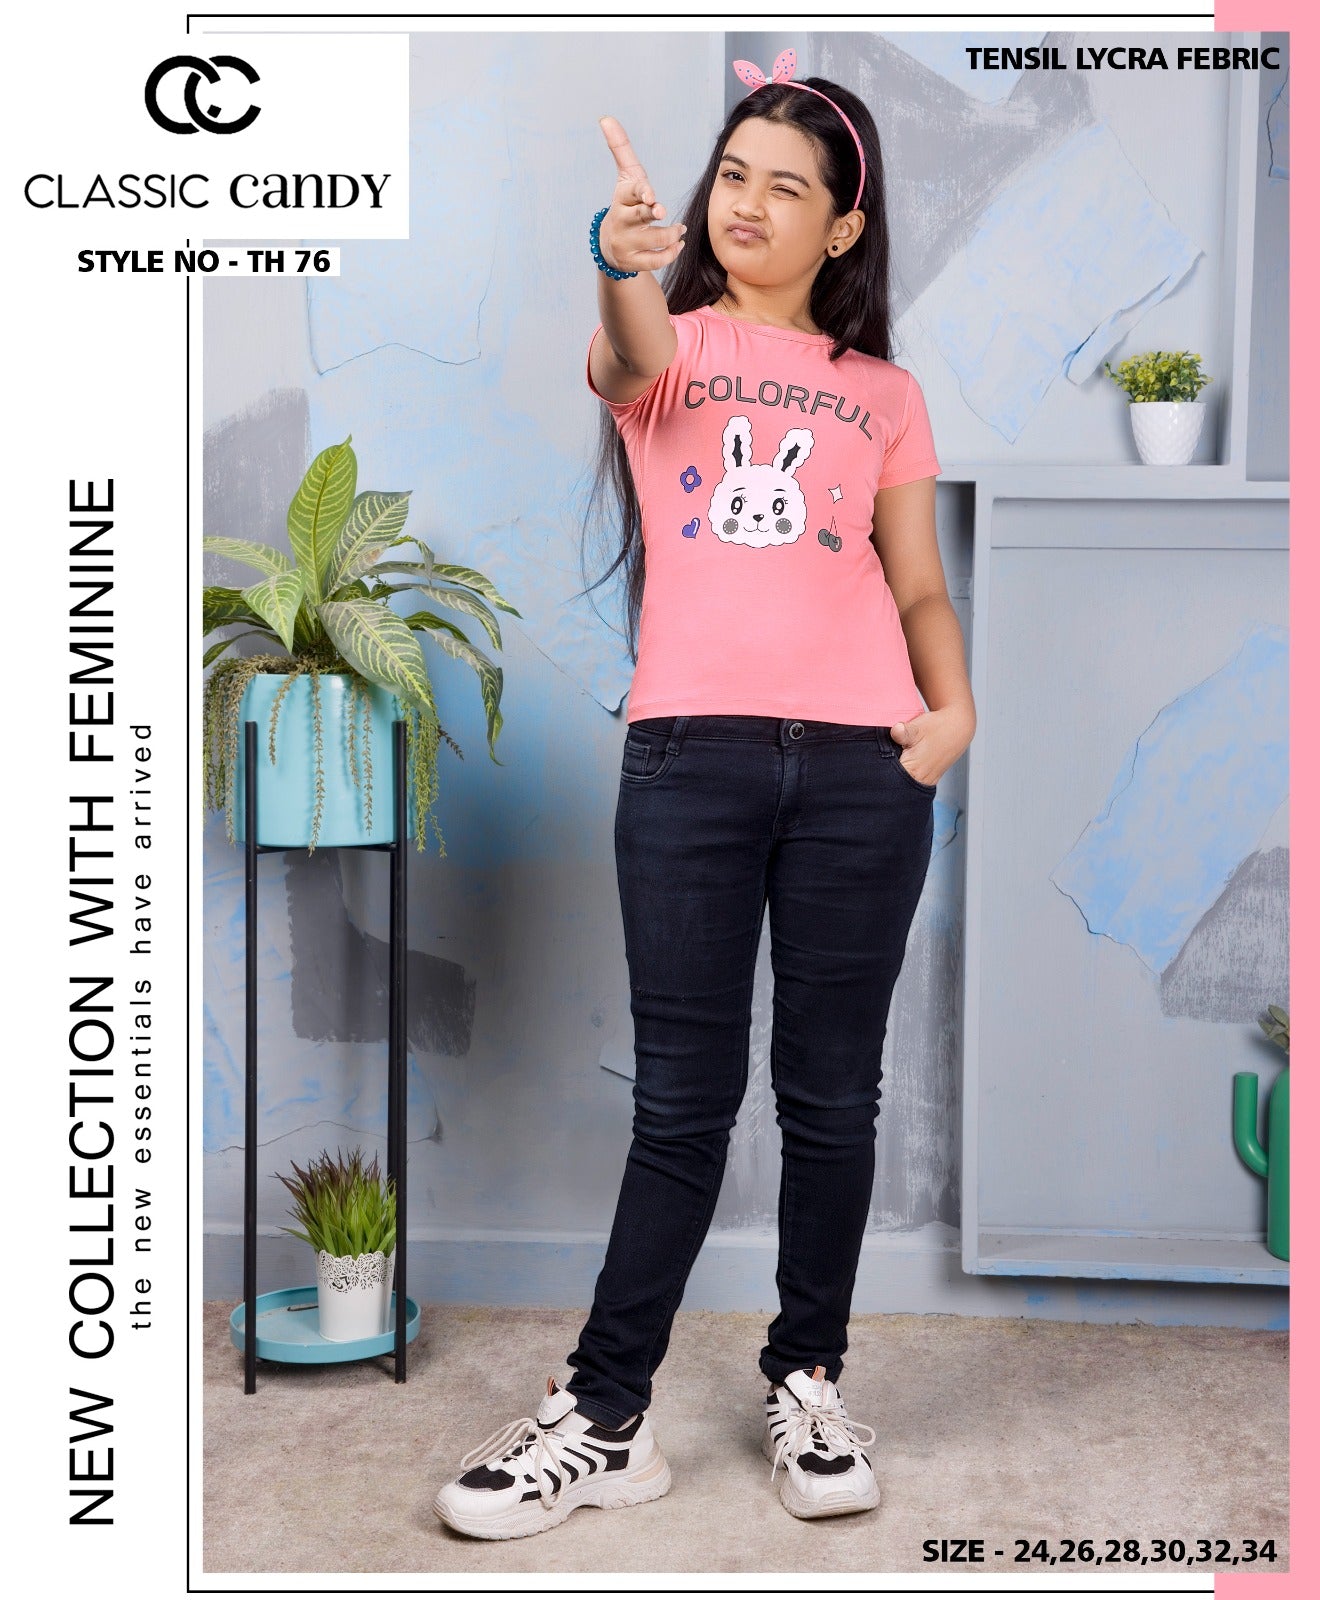 Th-76 Classic Candy Tencil Lycra Girls Tshirt